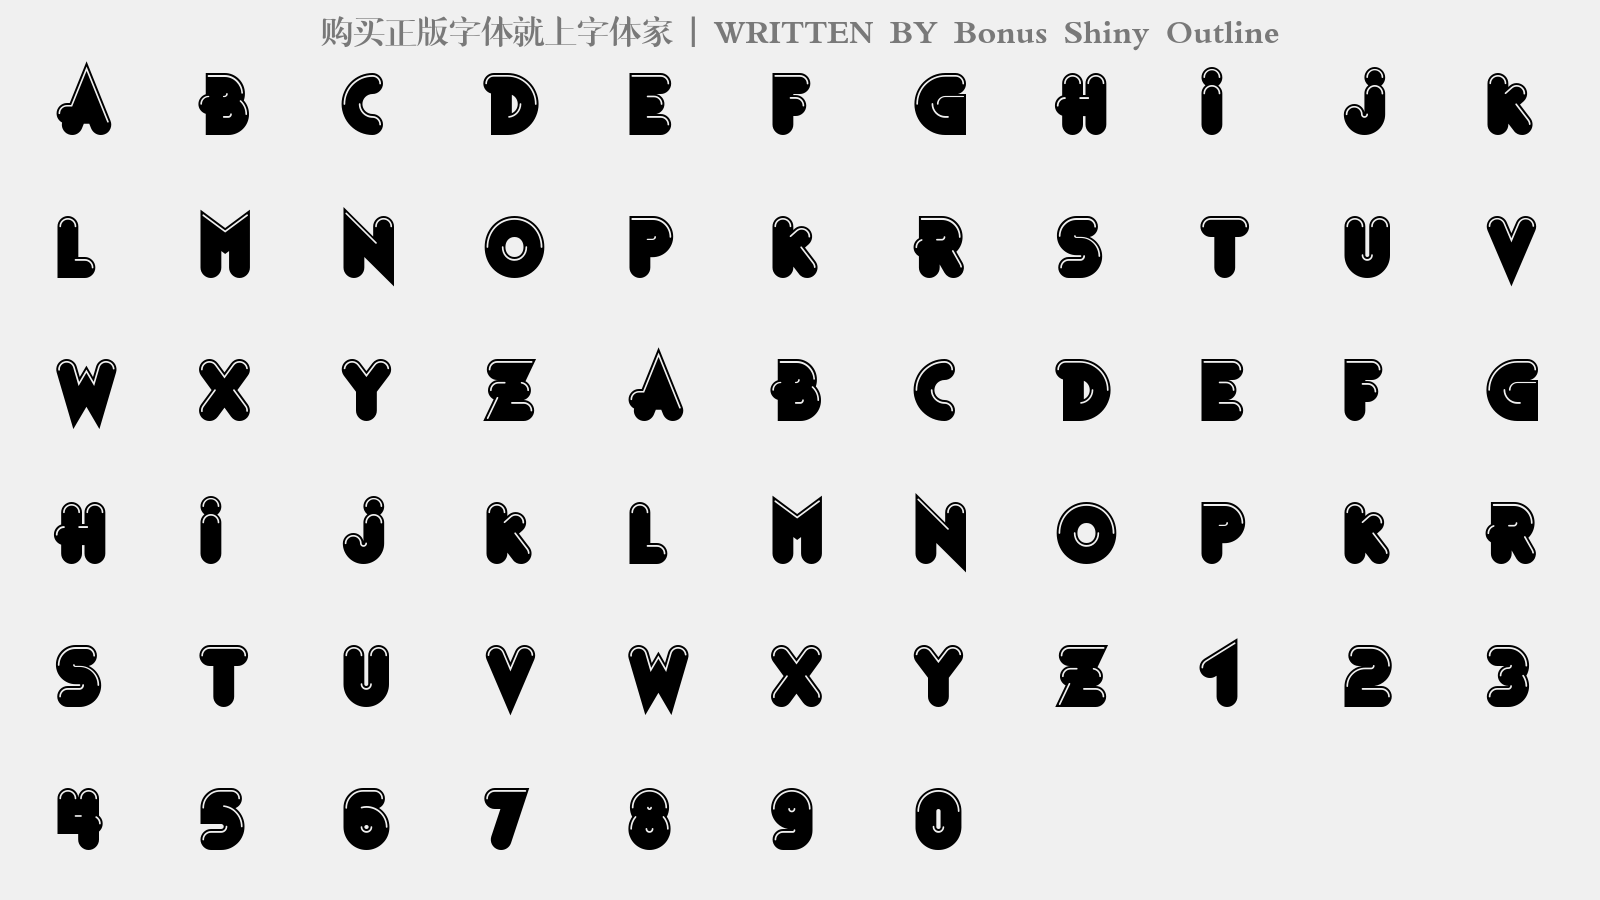 Bonus Shiny Outline - 大写字母/小写字母/数字